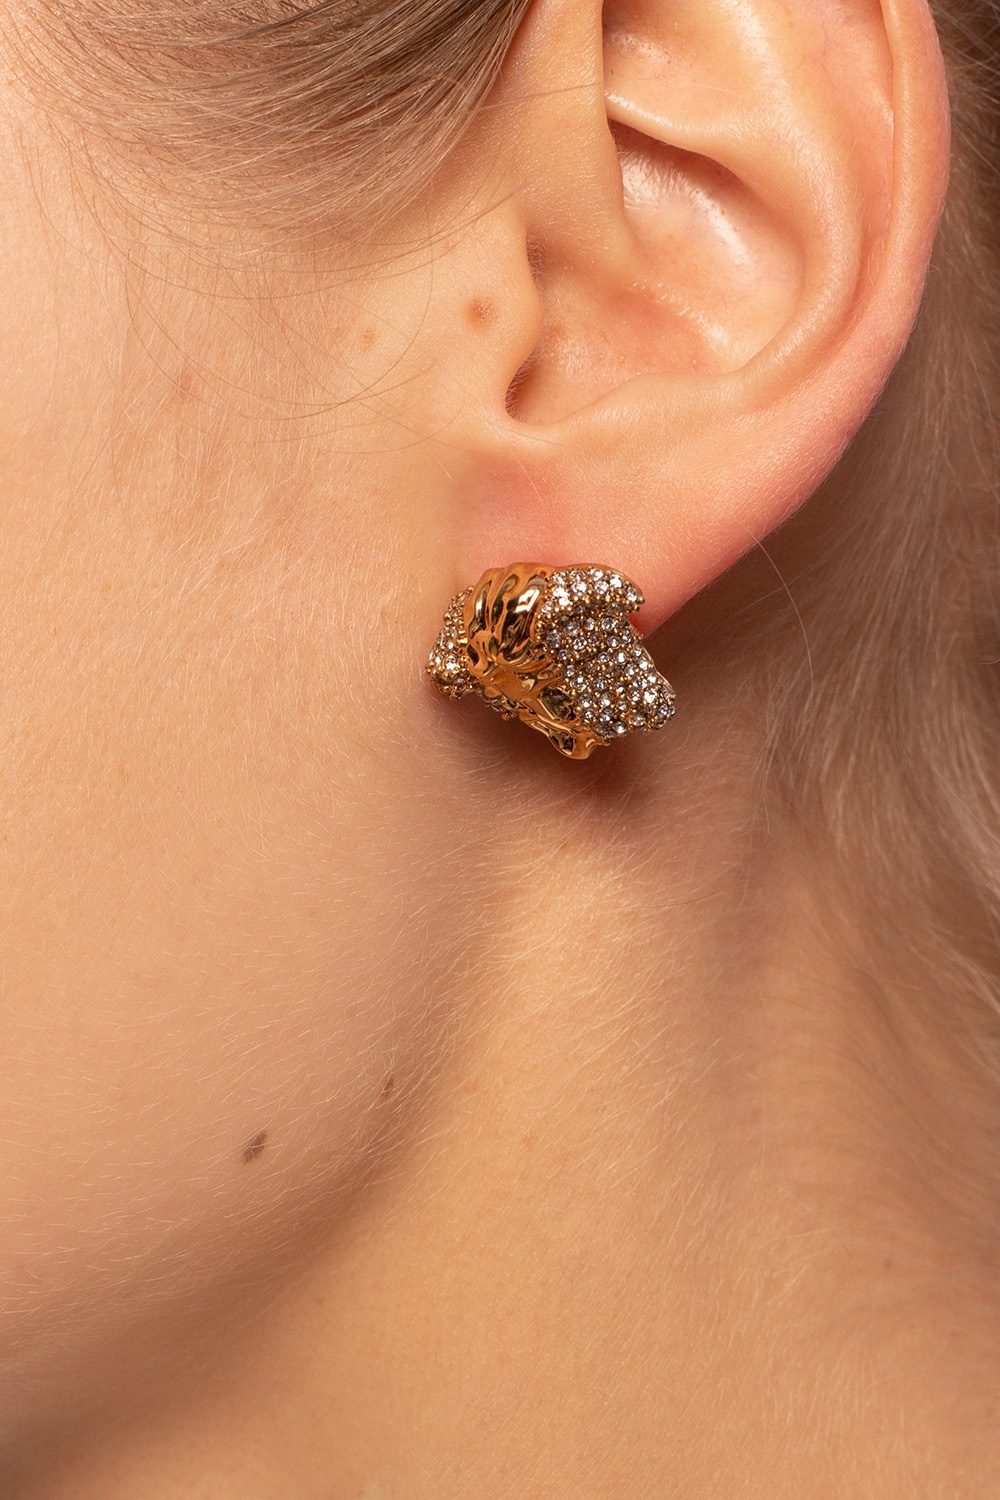 medusa head earrings